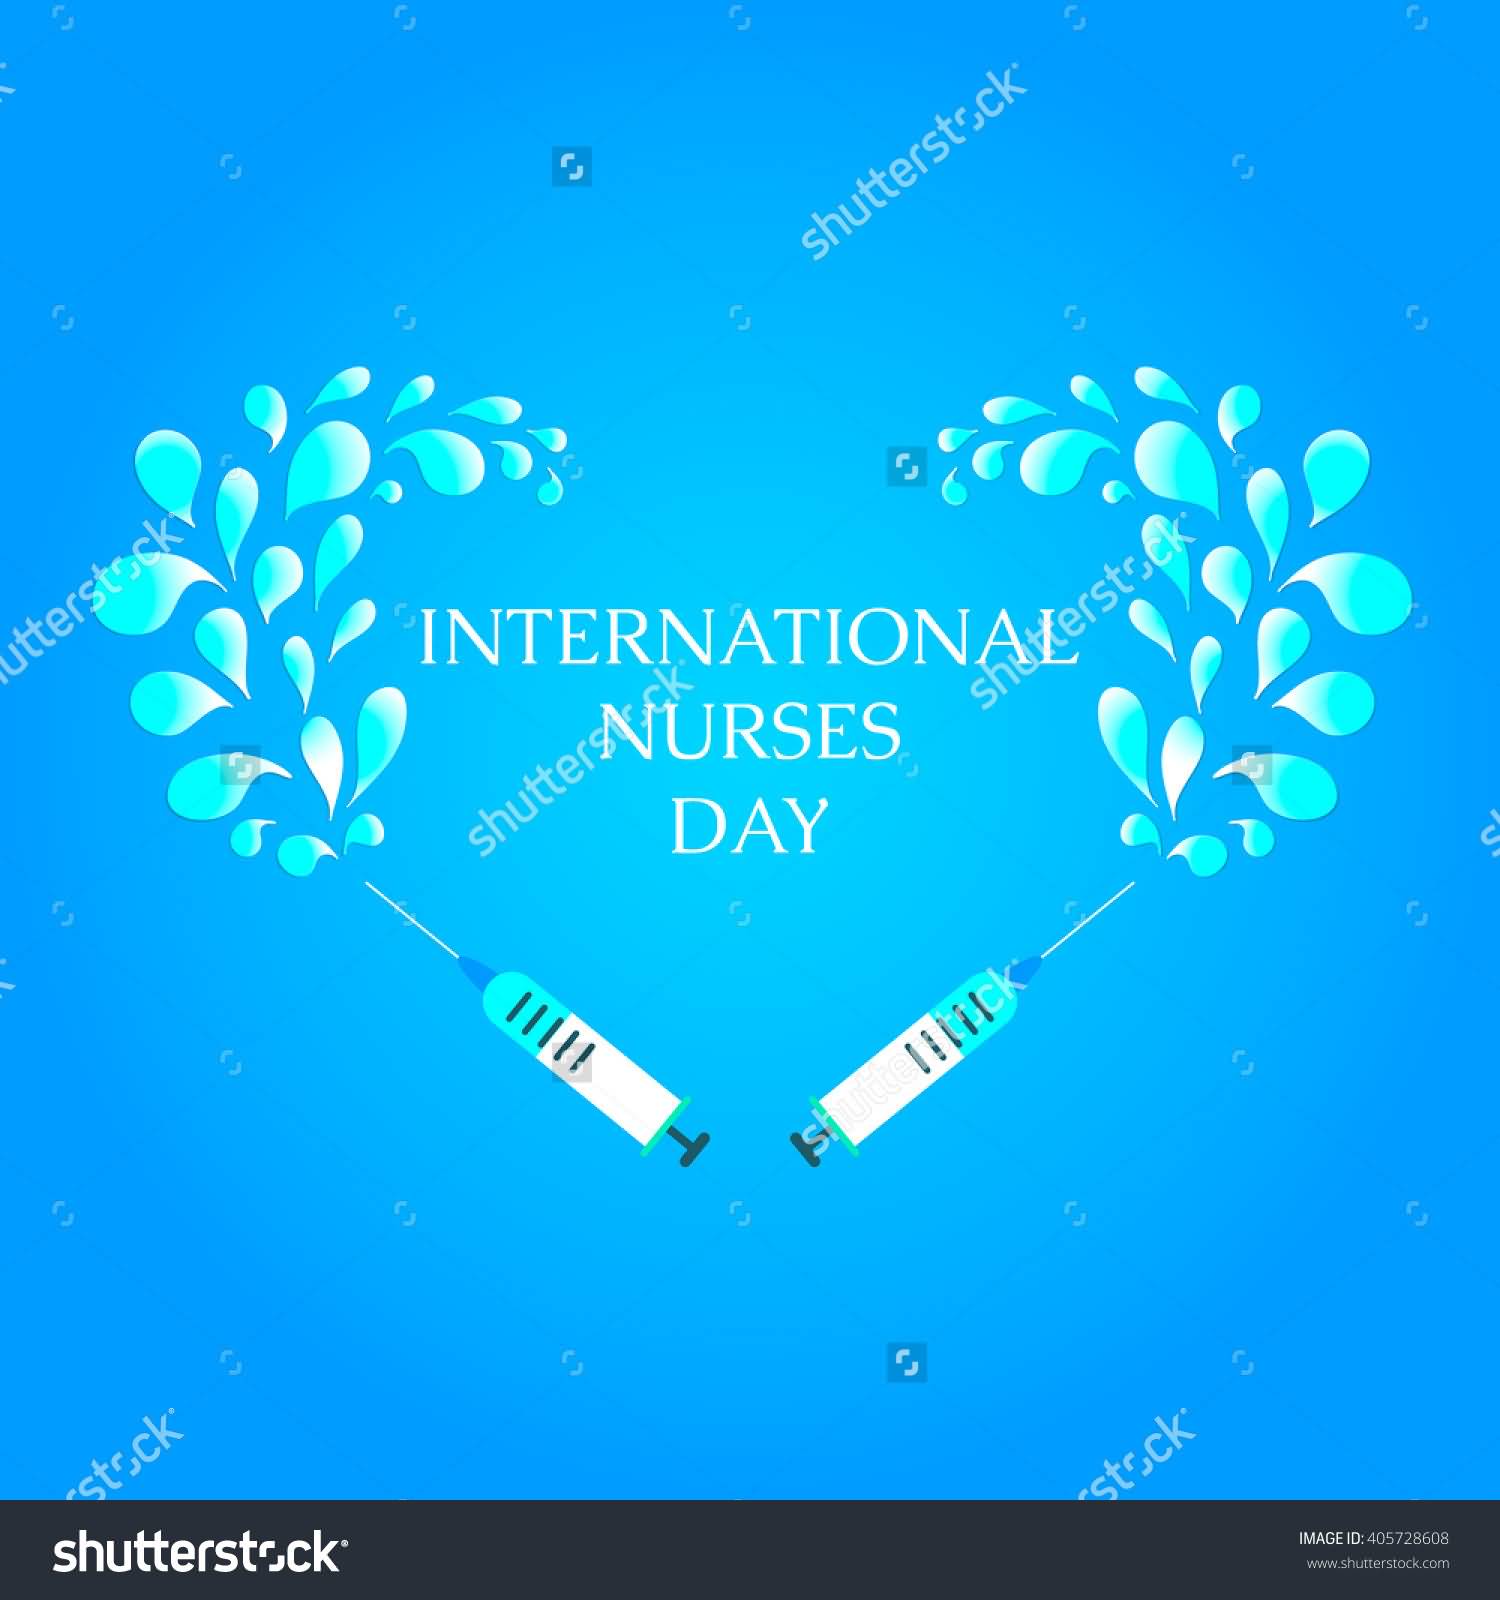 International Nurses Day Injections Illustration